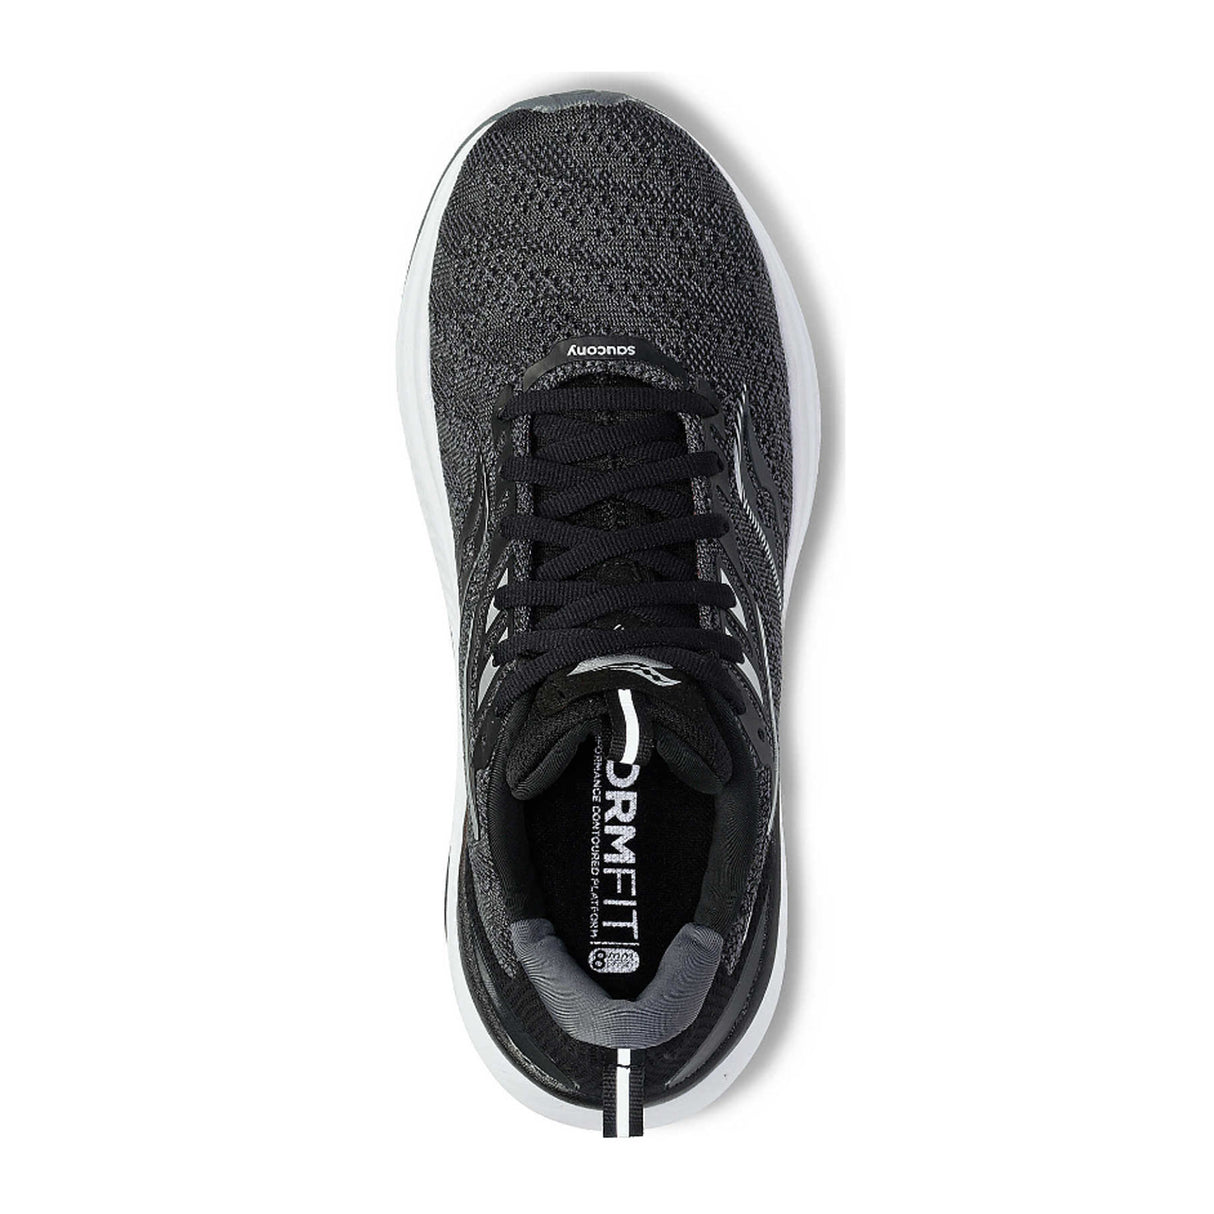 Saucony Echelon 9 Running Shoe (Women) - Black/White Athletic - Running - Neutral - The Heel Shoe Fitters